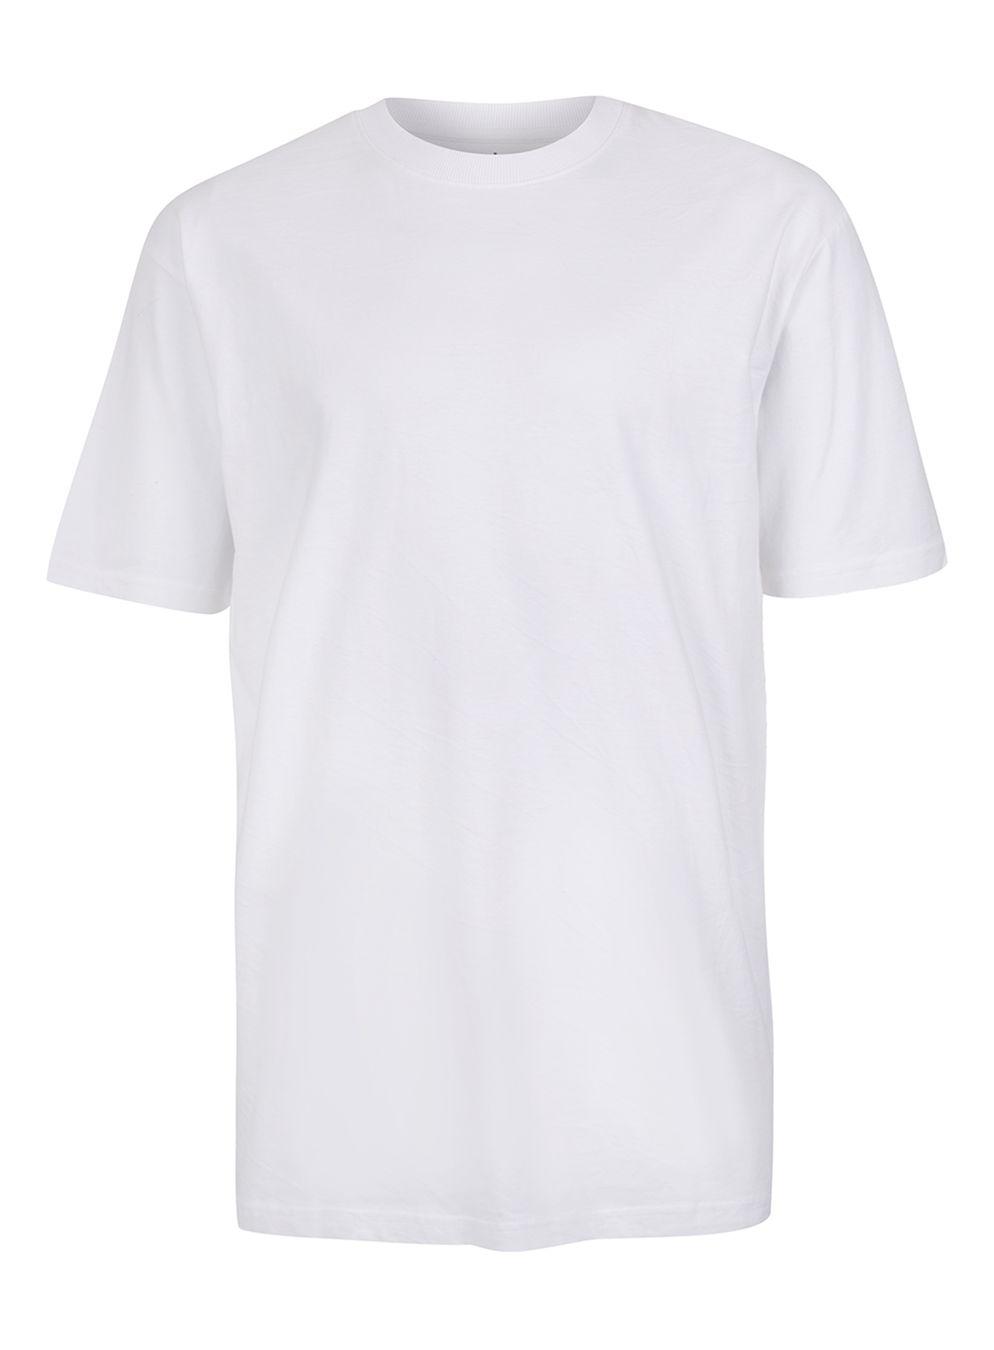 TOPMAN Cotton White '90s Style Oversized T-shirt for Men - Lyst